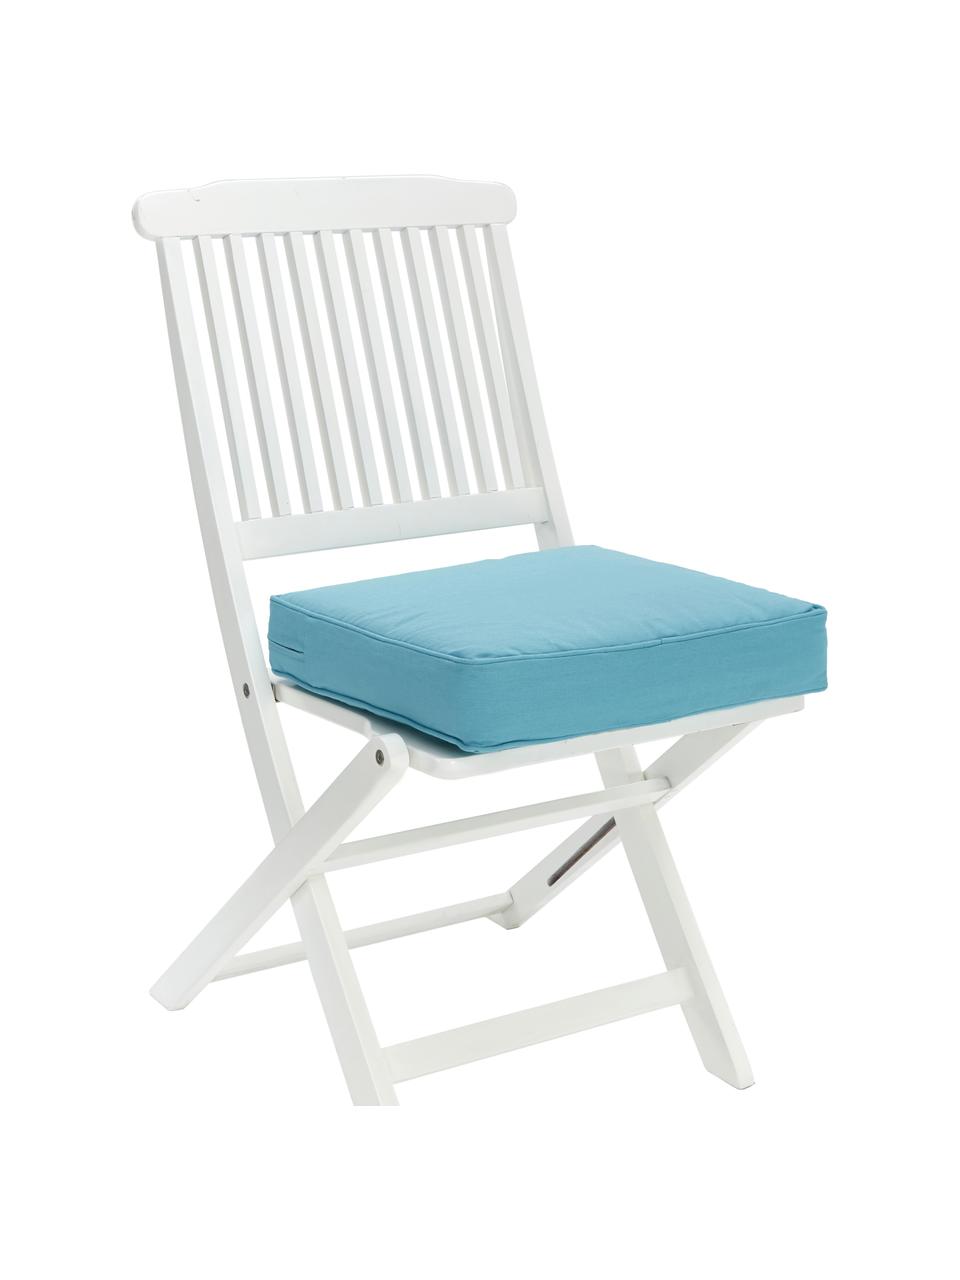 Hohes Baumwoll-Sitzkissen Zoey in Blau, Bezug: 100% Baumwolle, Blau, B 40 x L 40 cm